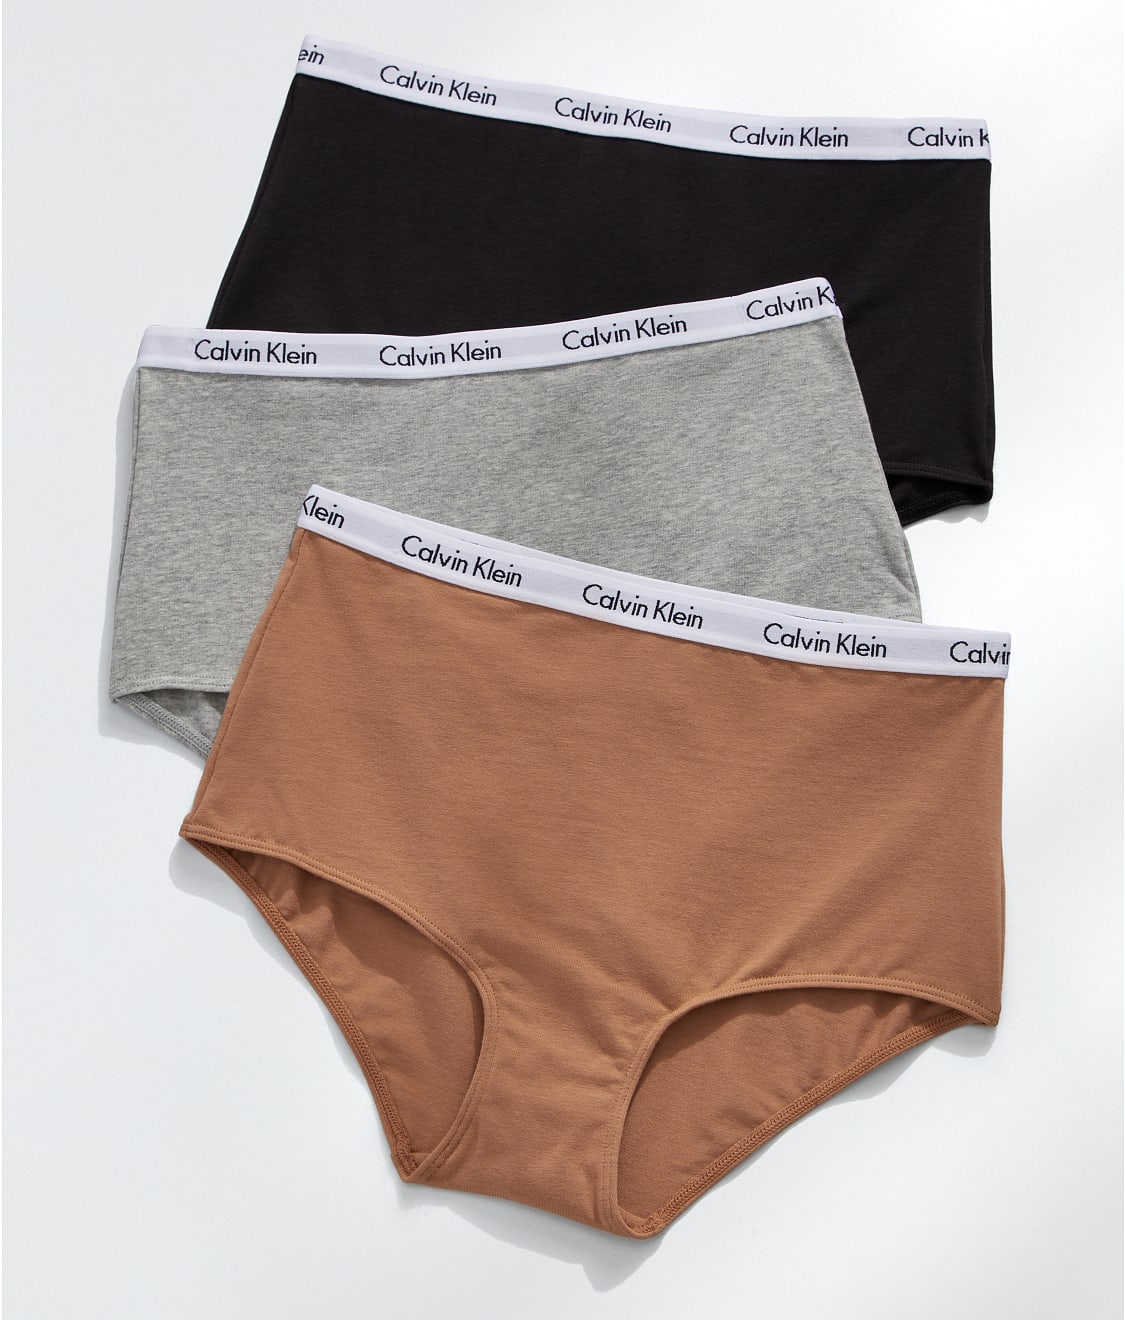 Calvin Klein Underwear Women's Carousel 3 Pack Panties, Multi, Large